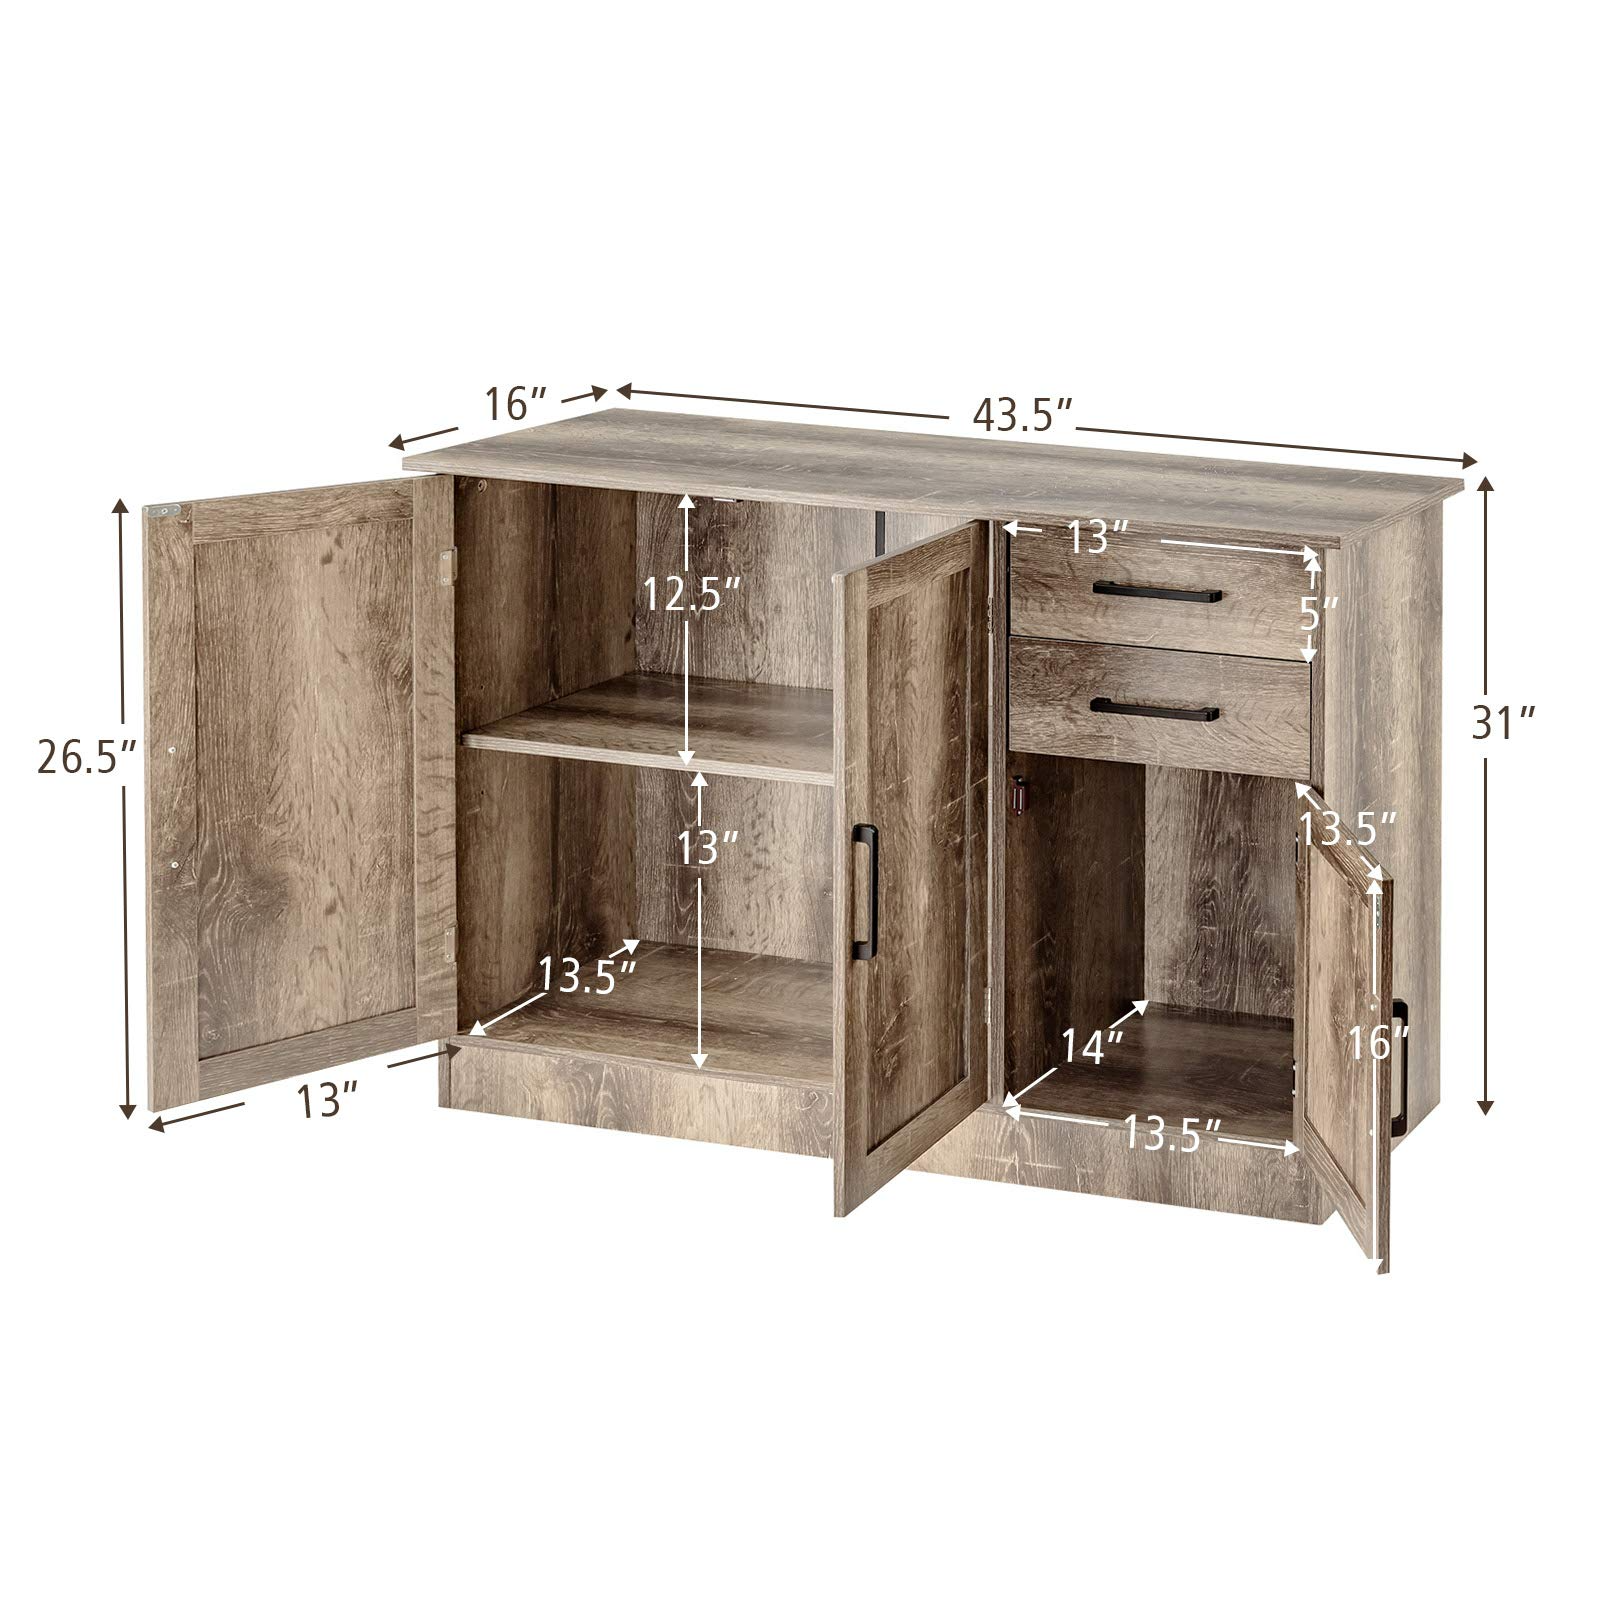 Giantex Buffet Server Sideboard Storage Cabinet Console Table Utensils Organizer